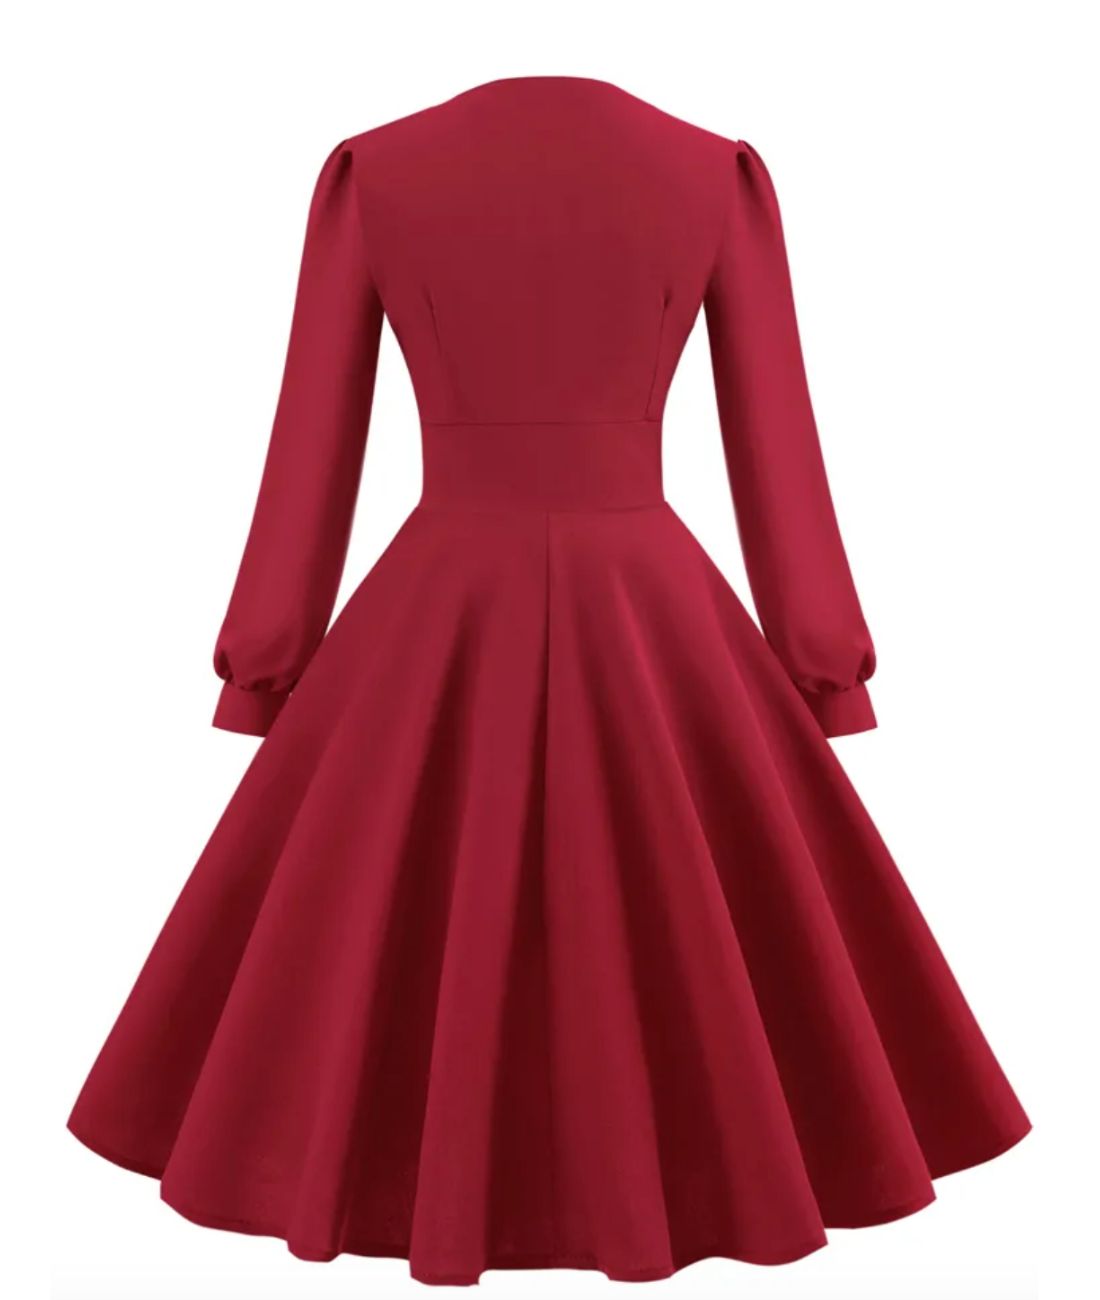 Robe Années 40 Rouge Jupe Plissée - Madame Vintage